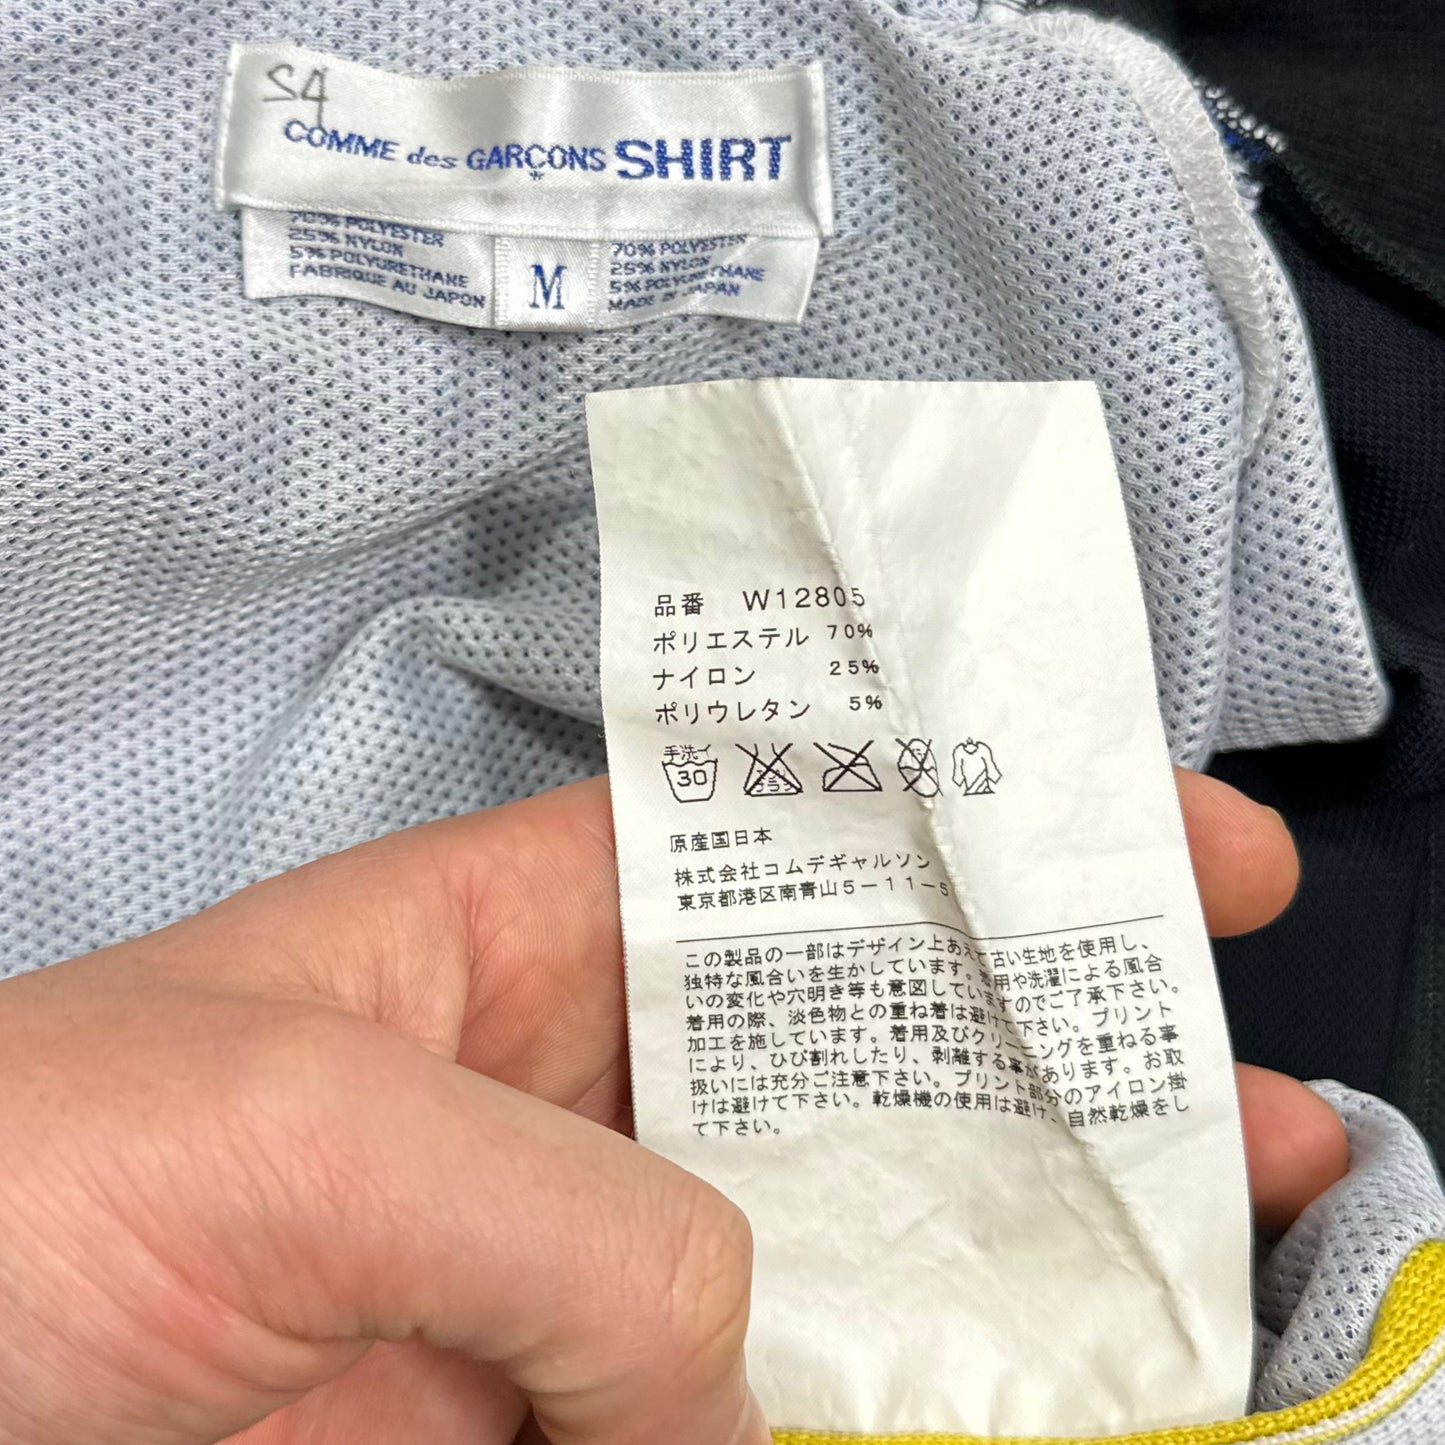 CDG Shirt 00’s Technical Spellout Mesh Jersey Jacket - M